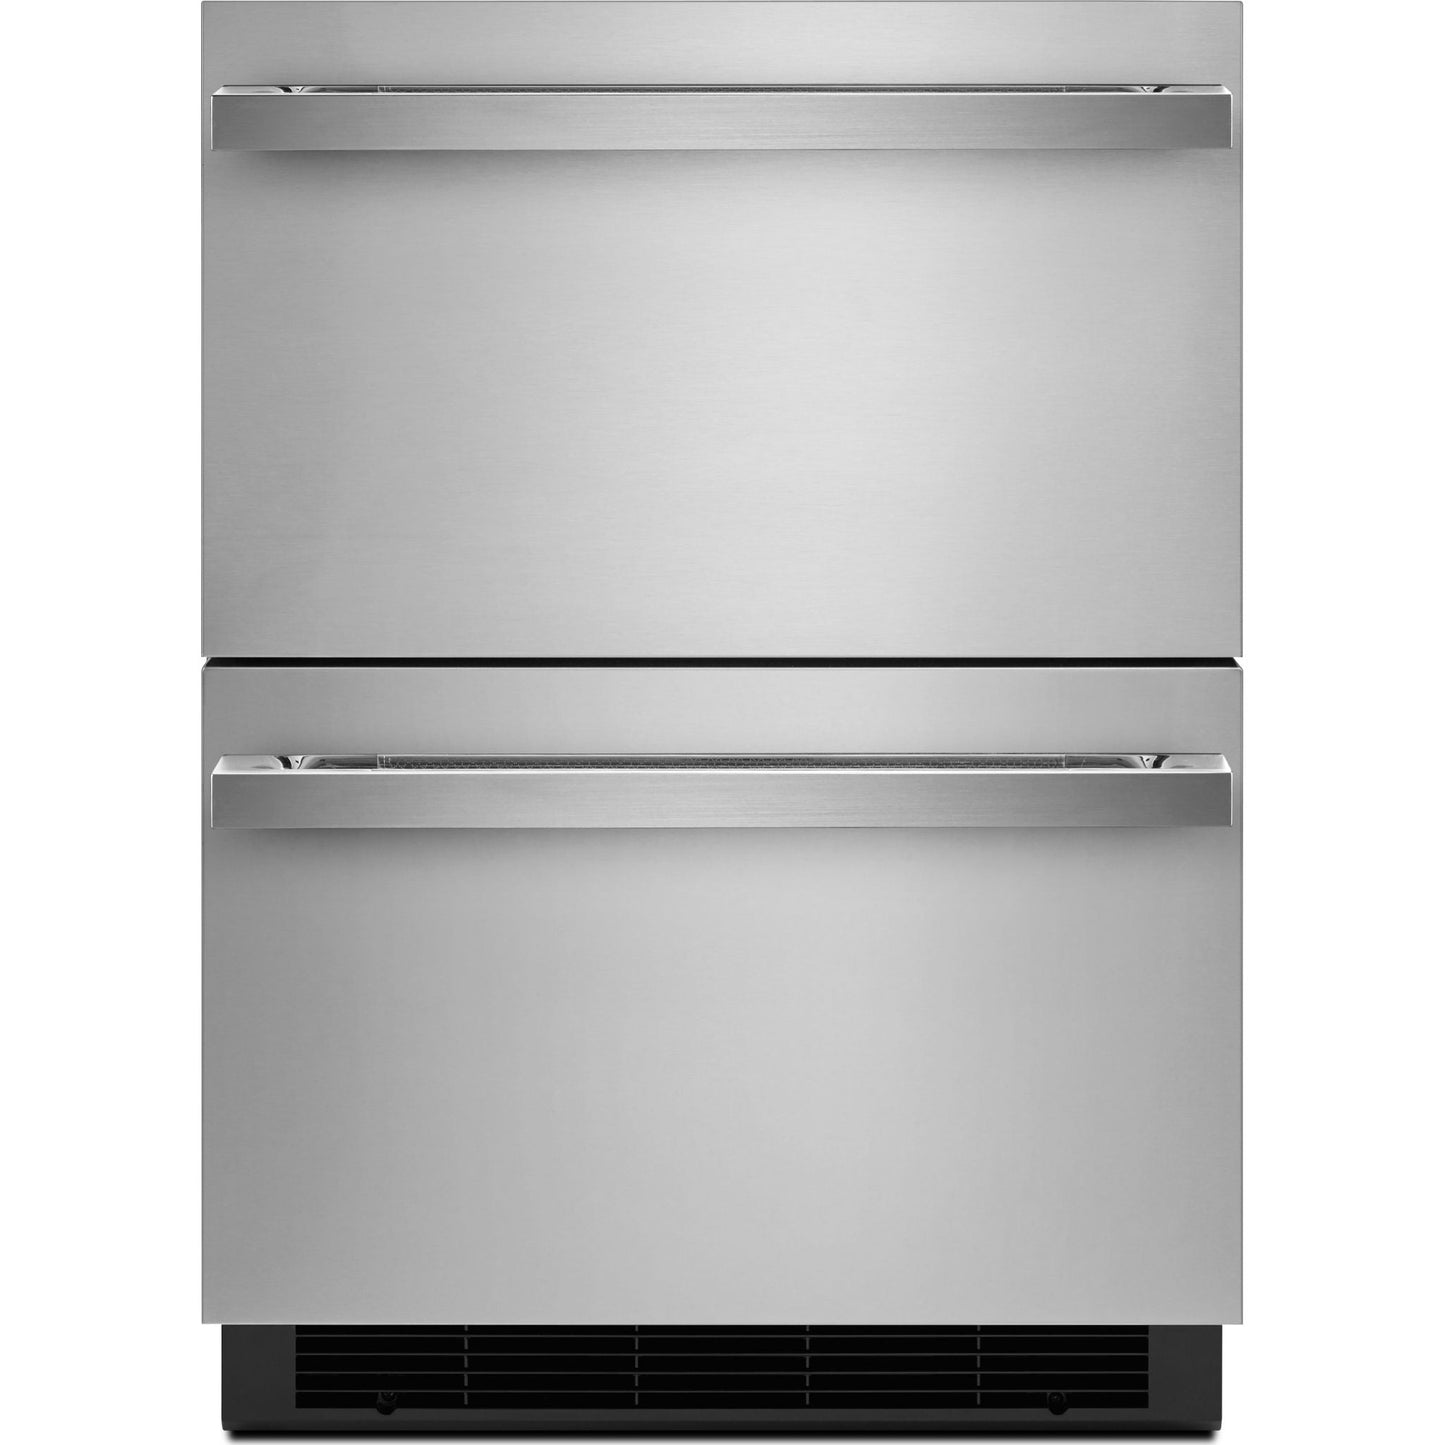 JennAir Refrigerator Drawer (JUDFP242HM) - NOIR Stainless Steel